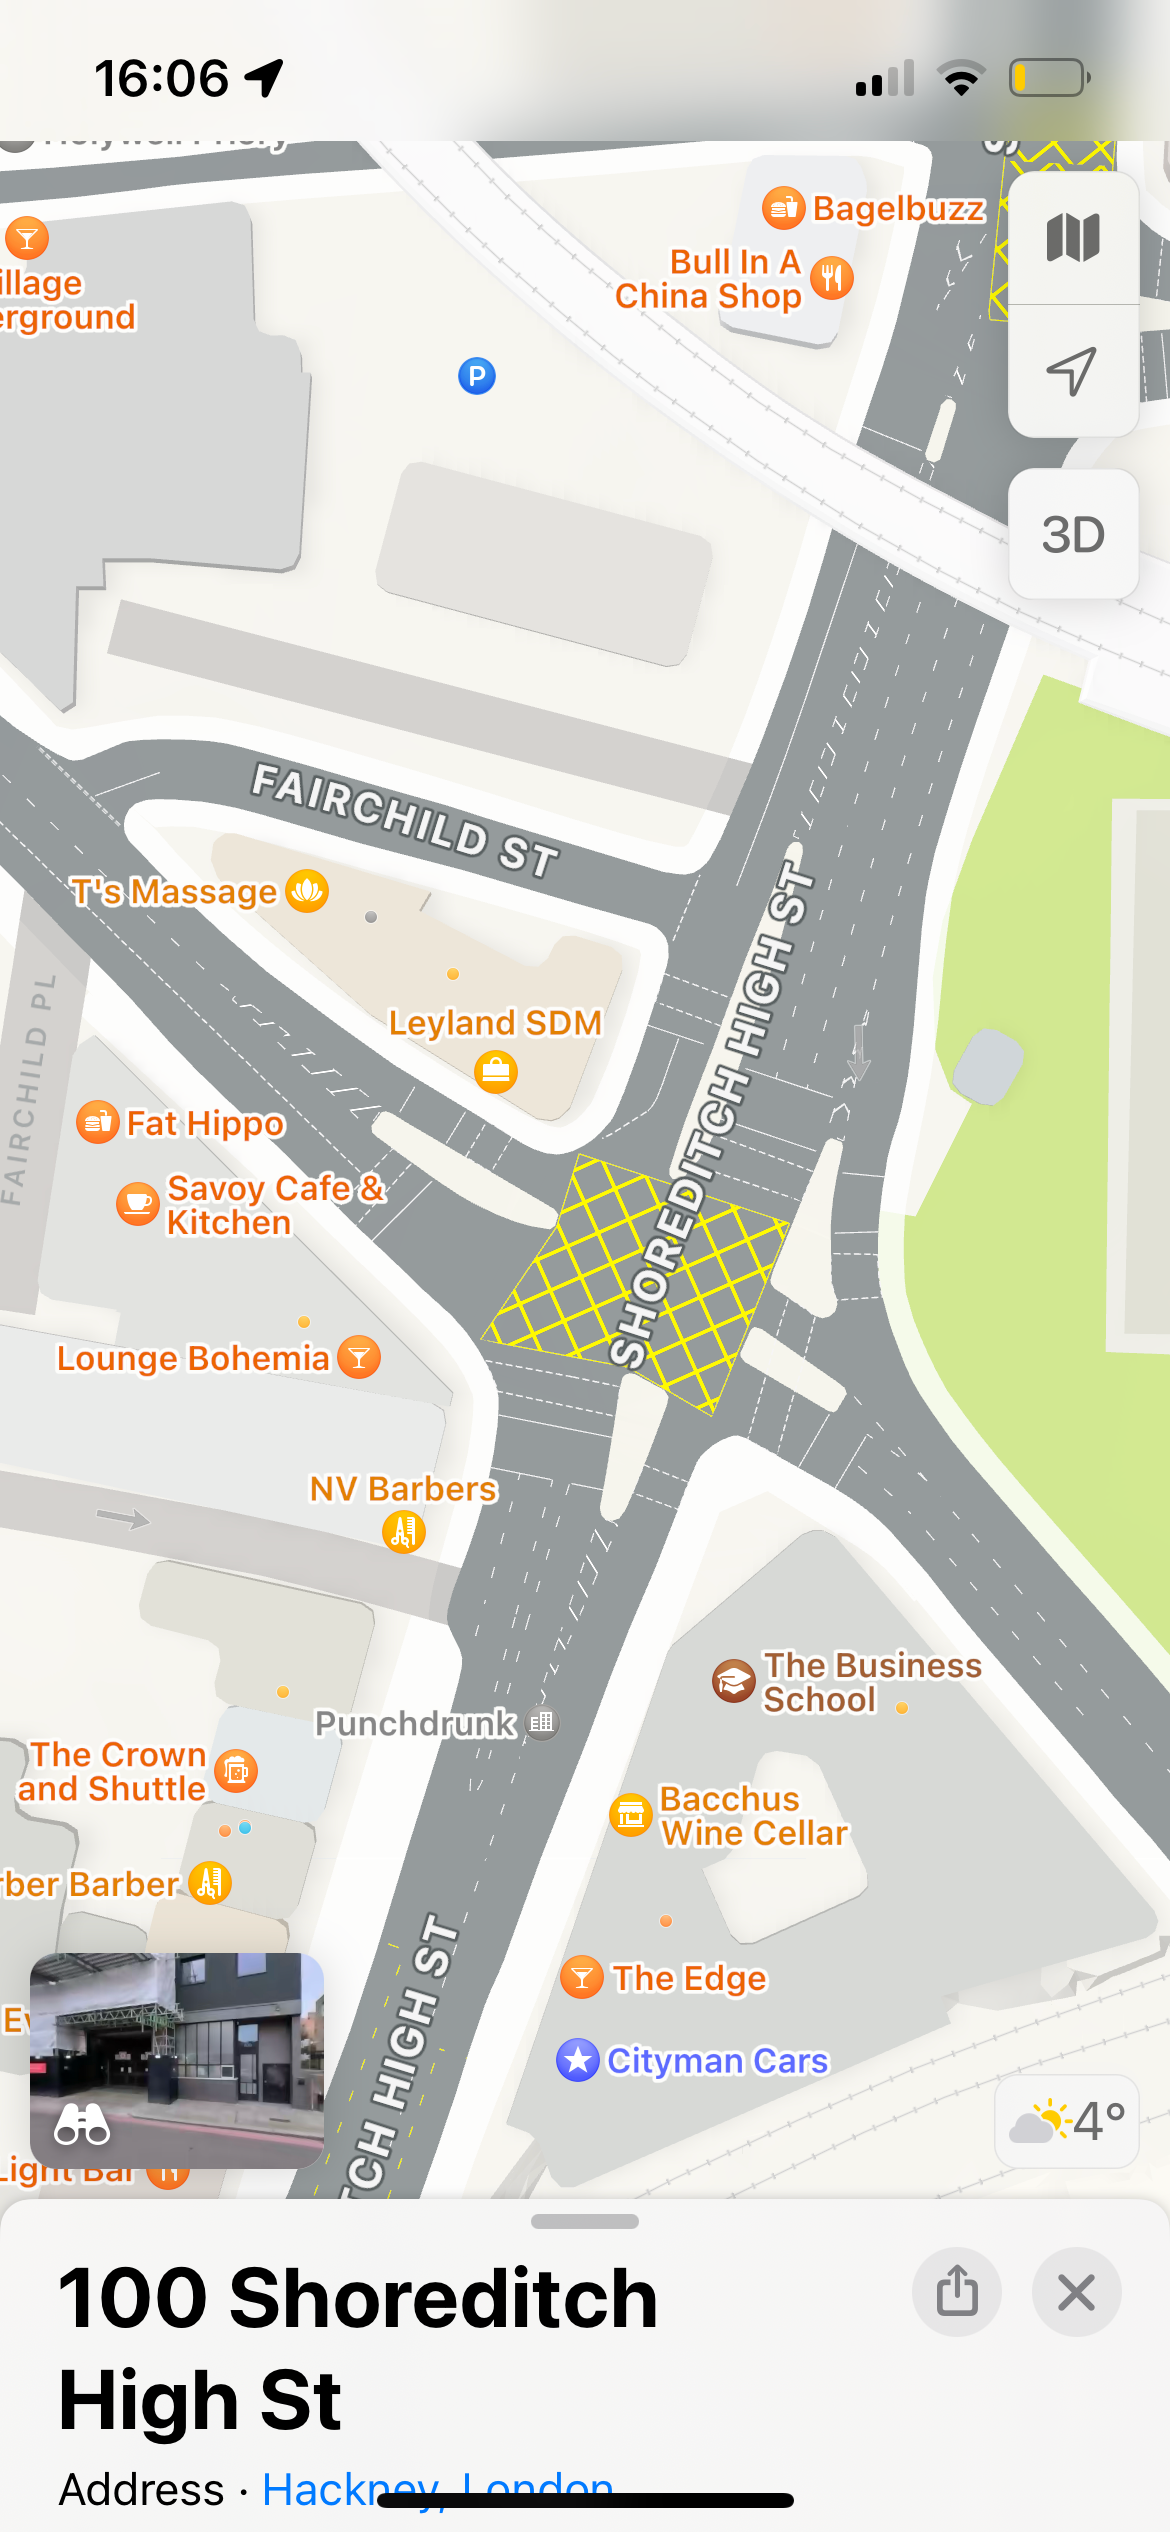 Apple Maps menampilkan detail marka jalan di persimpangan jalan di London